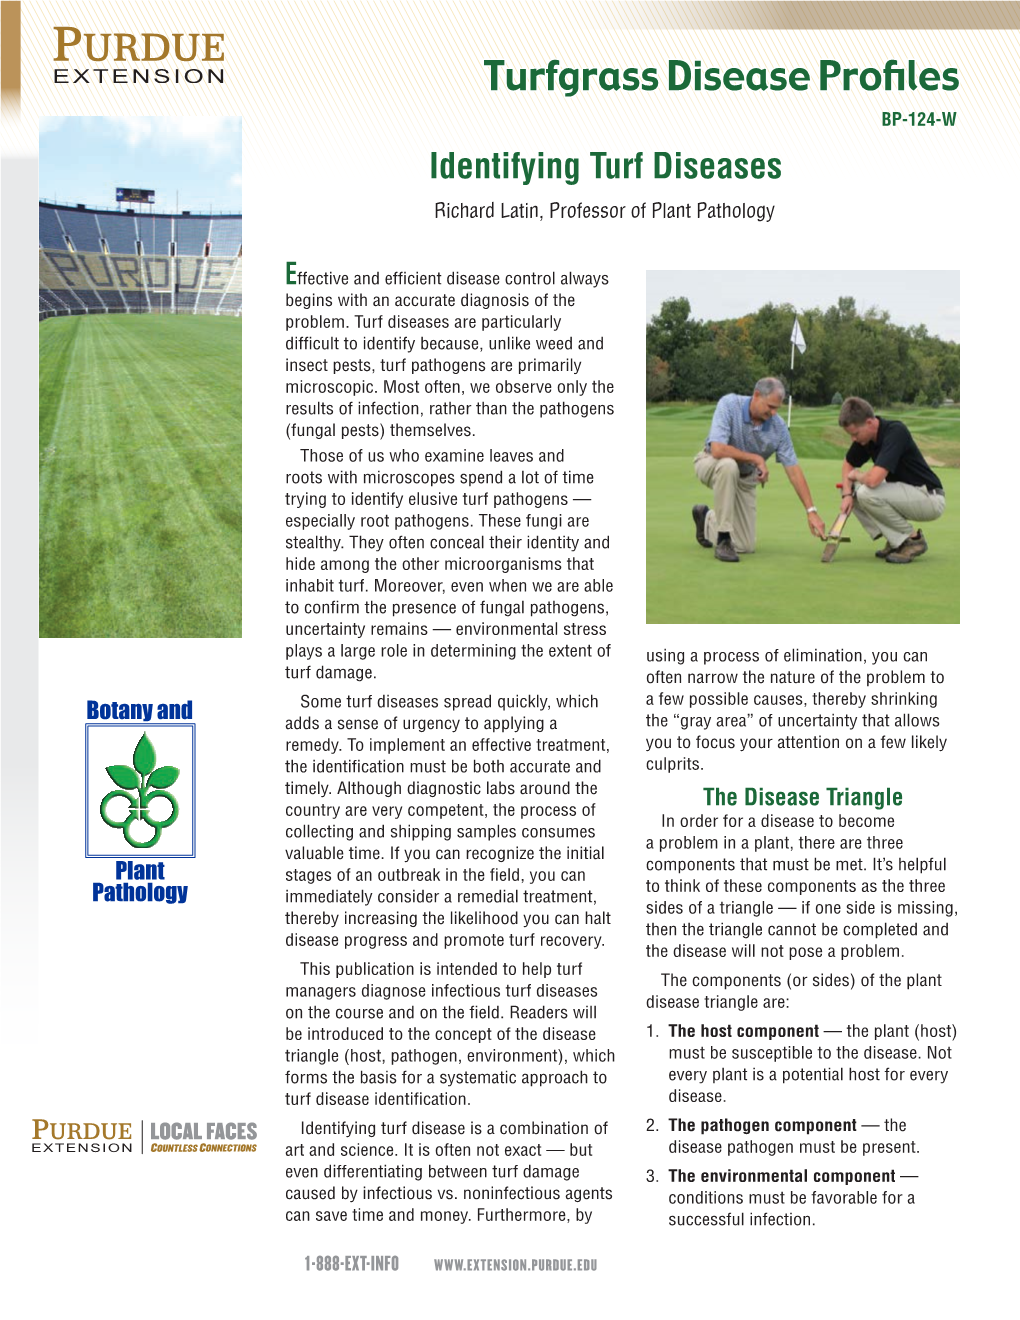 Turfgrass Disease Profiles: Identifying Turf Diseases